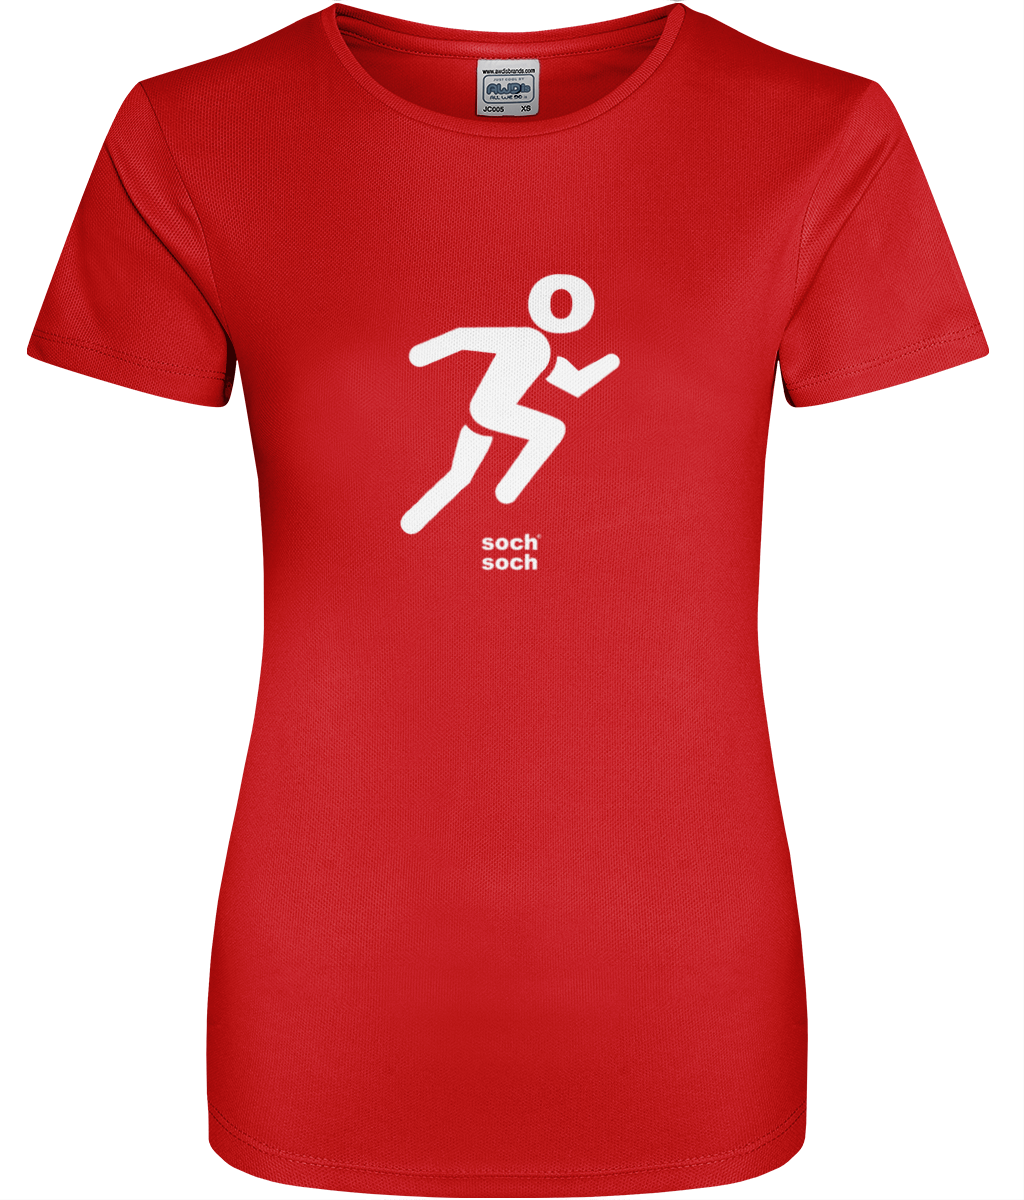 Women's Performance Running T-shirt